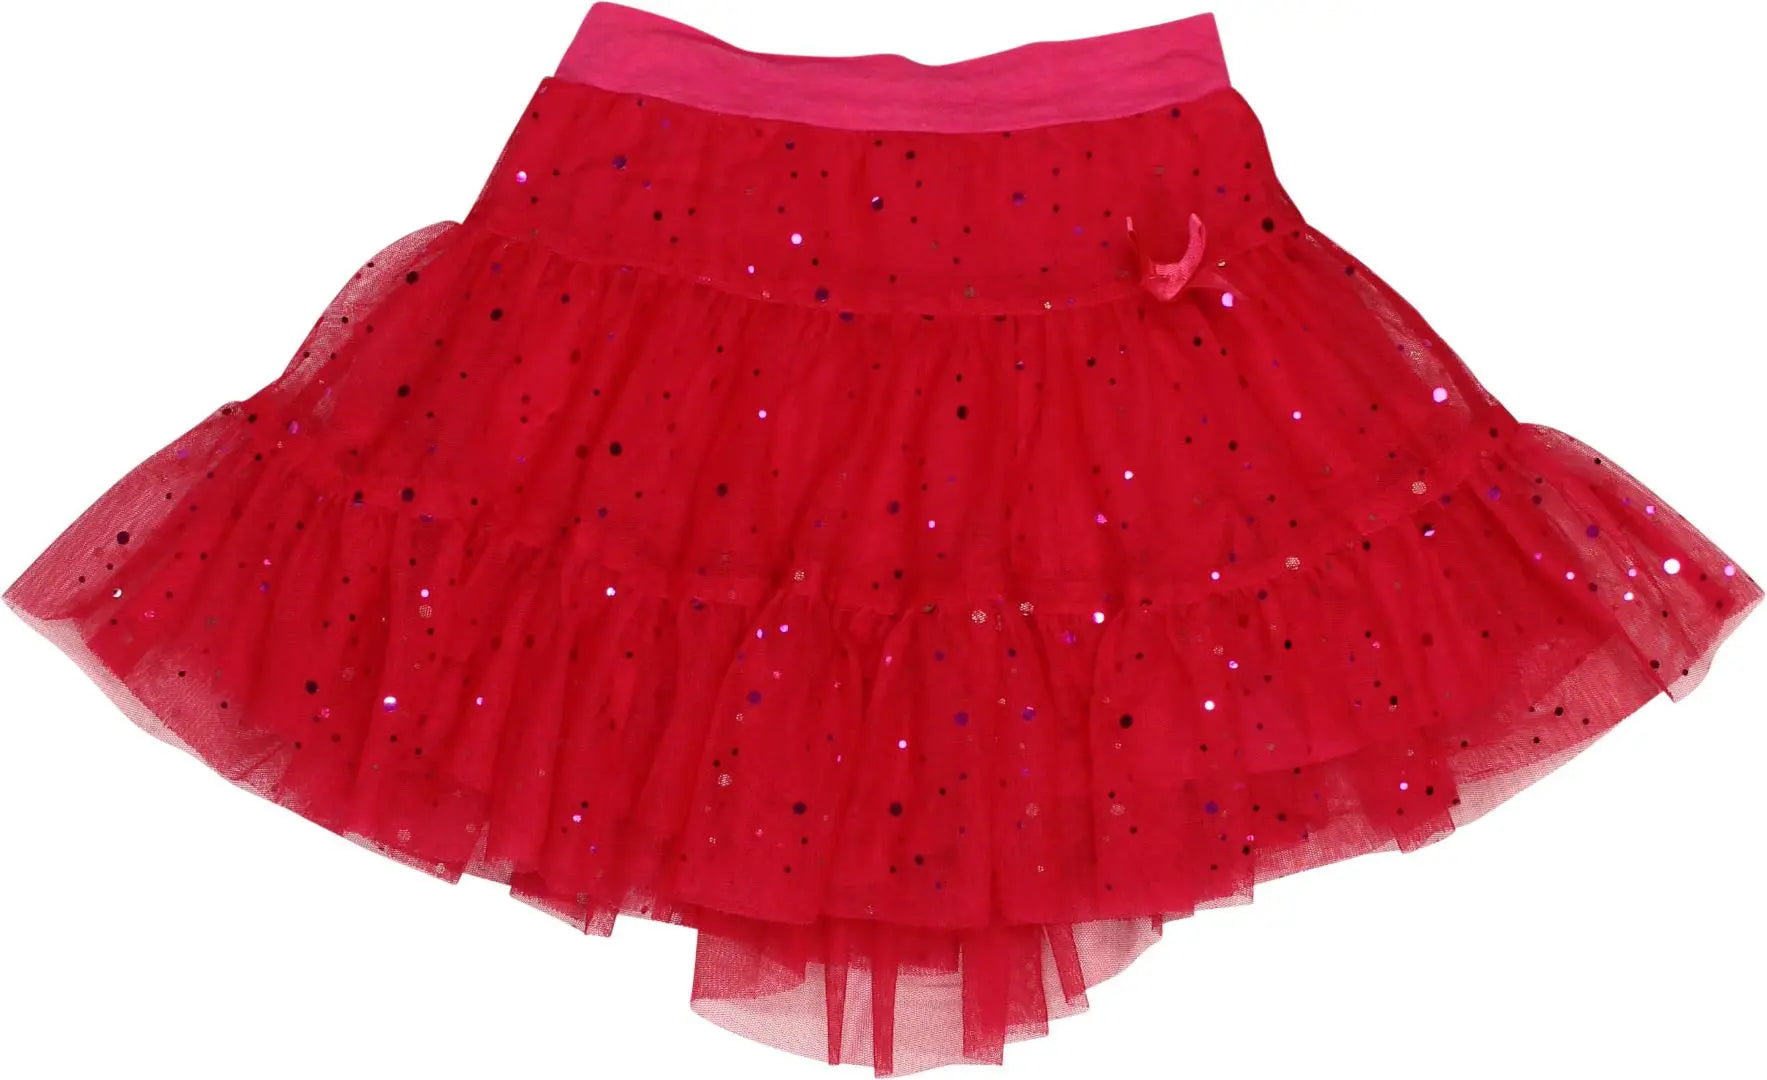 Frendz - Pink Skirt- ThriftTale.com - Vintage and second handclothing